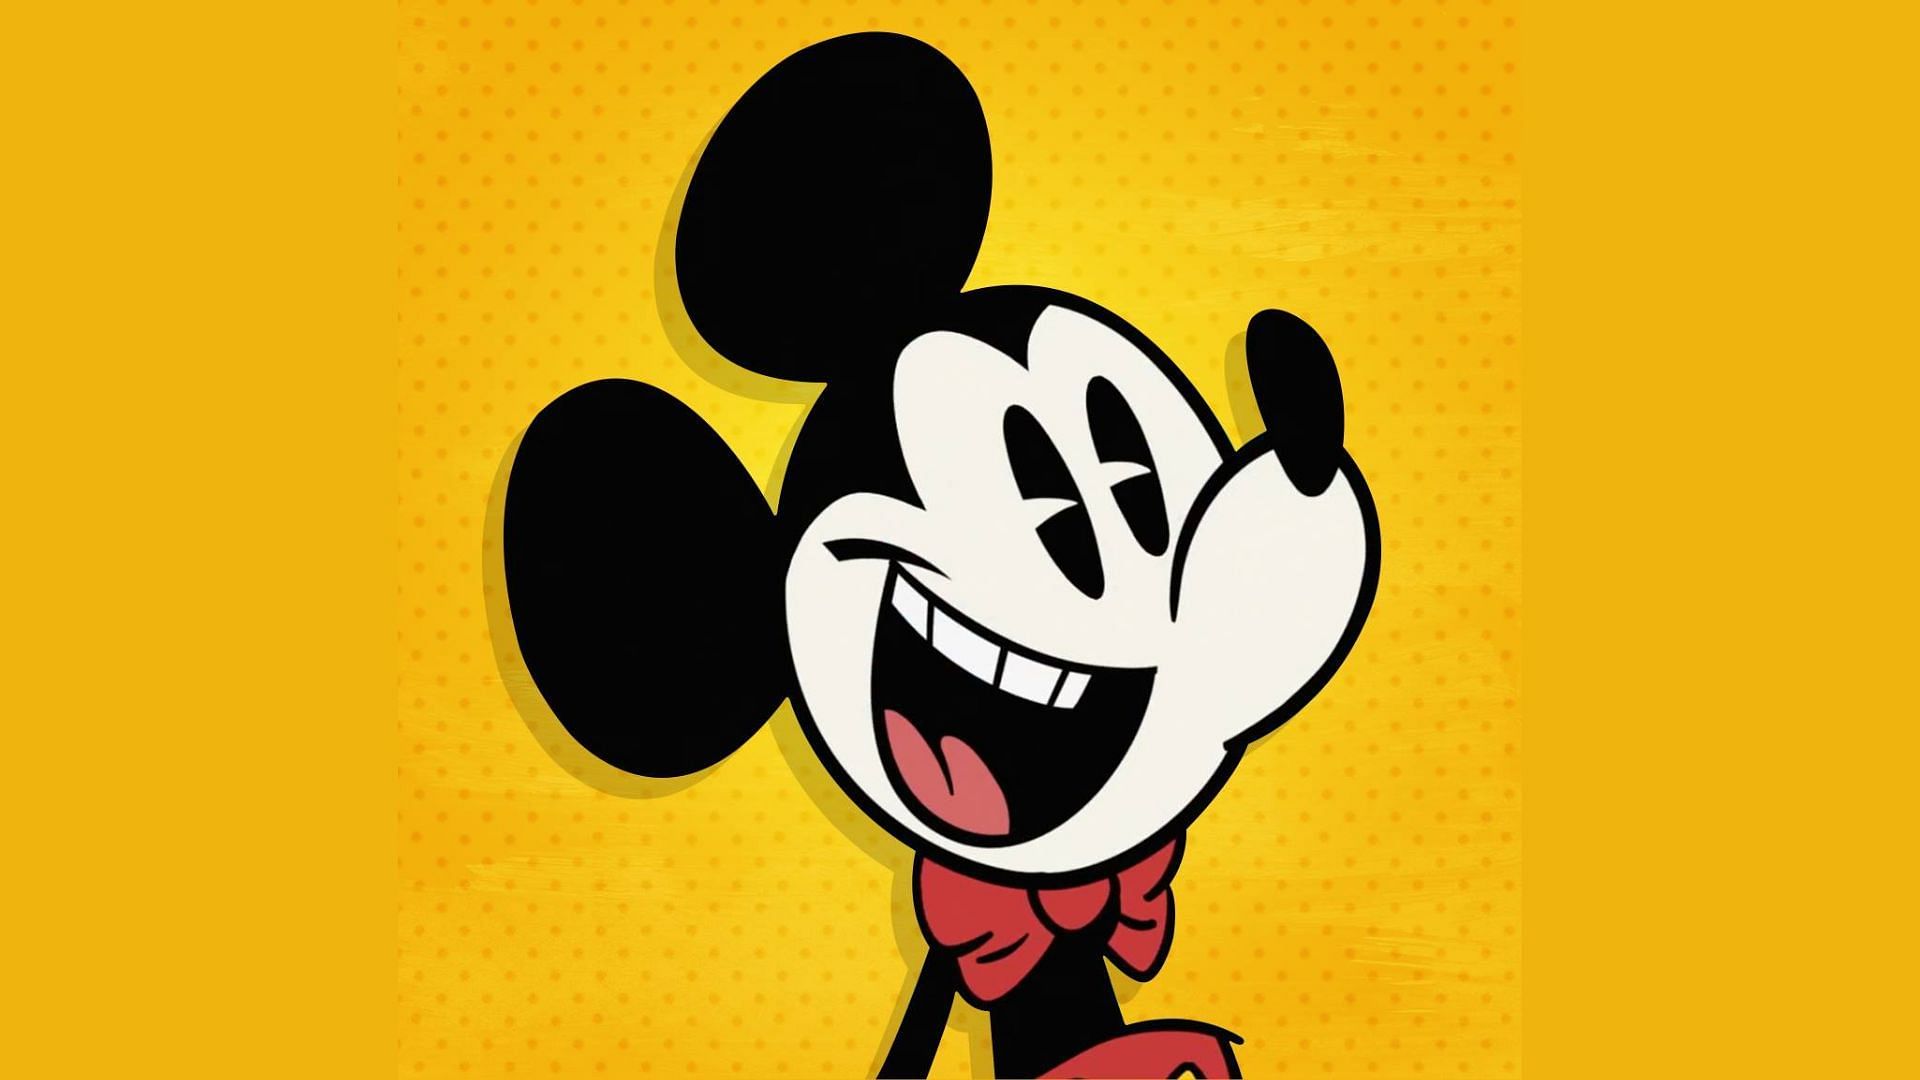  Micky Mouse (Image via Facebook)